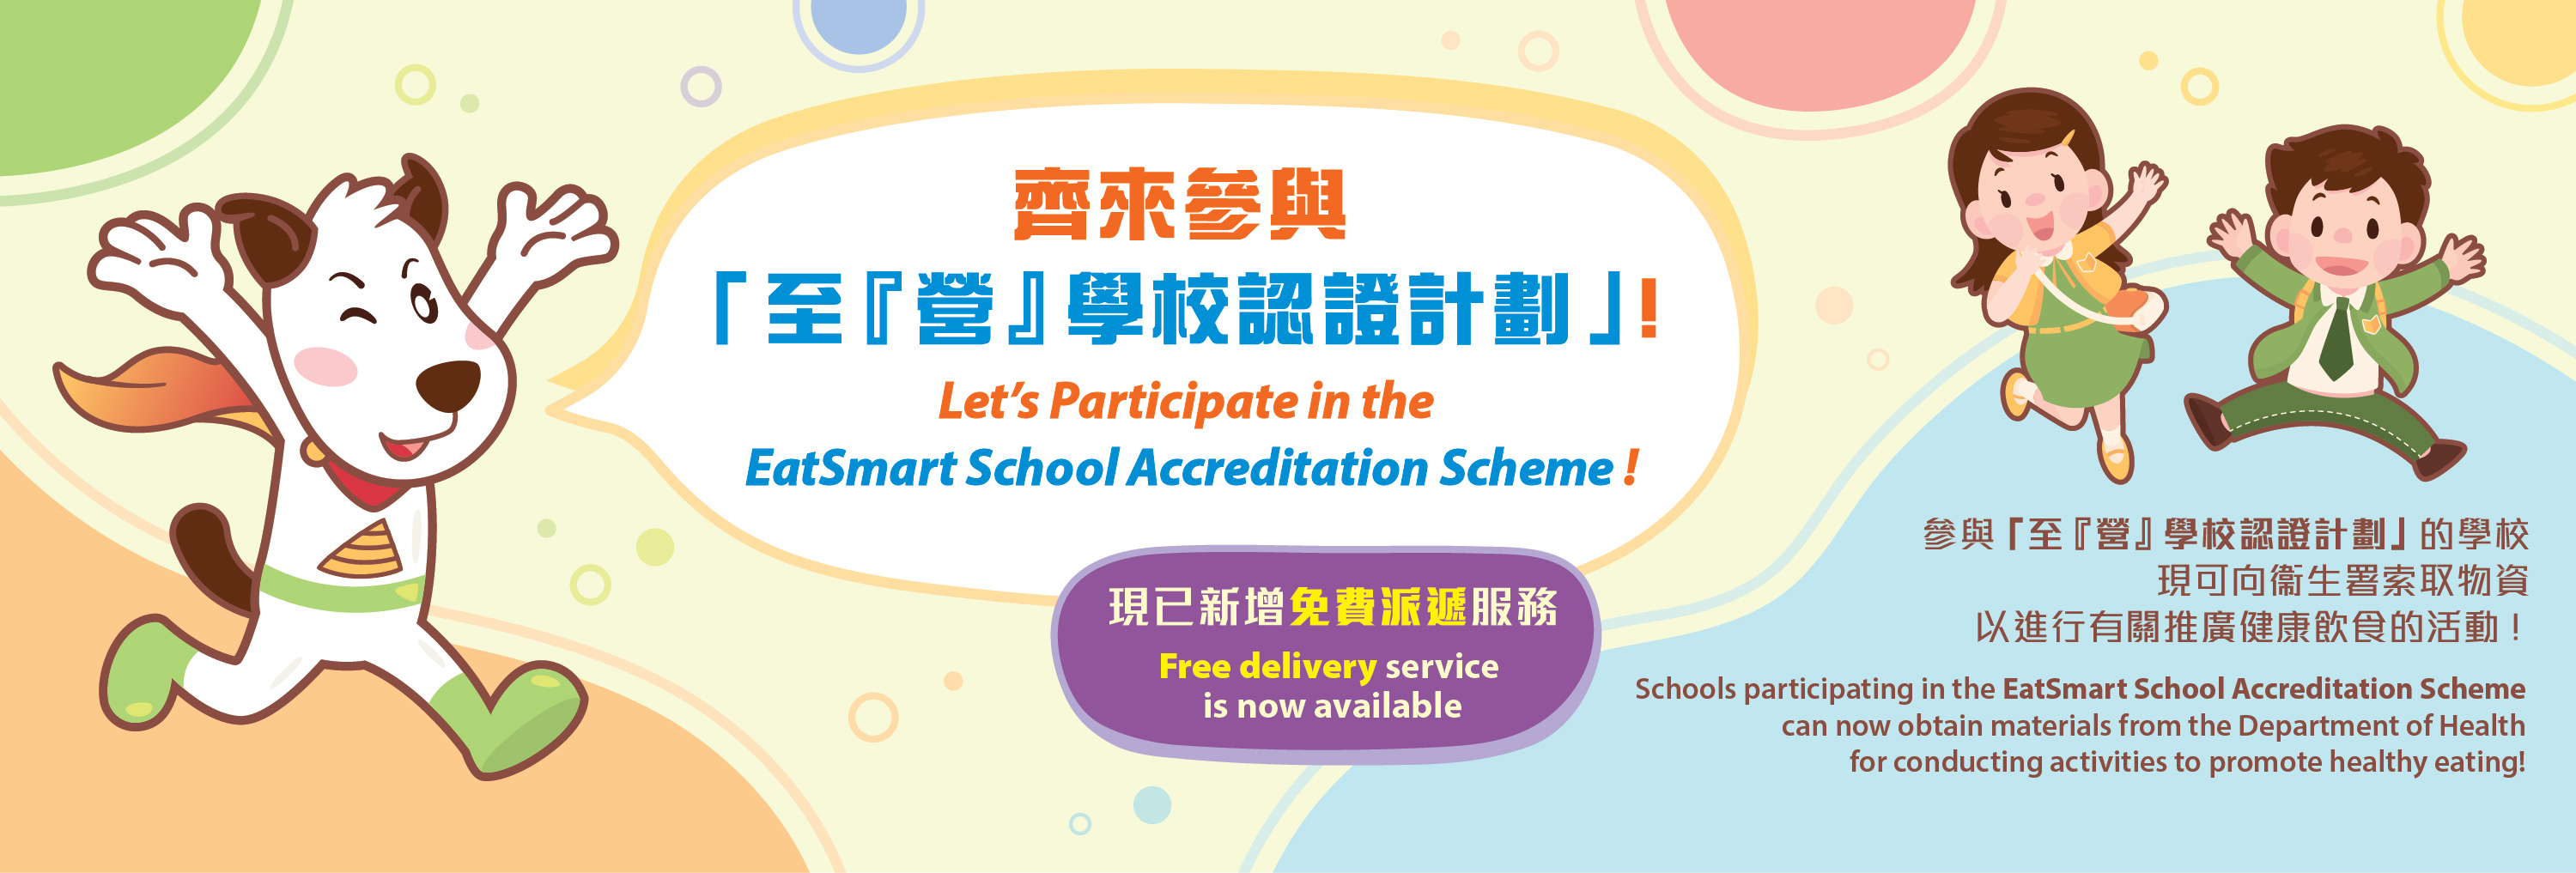 EatSmart School Accreditation Scheme - Request of material reply slip